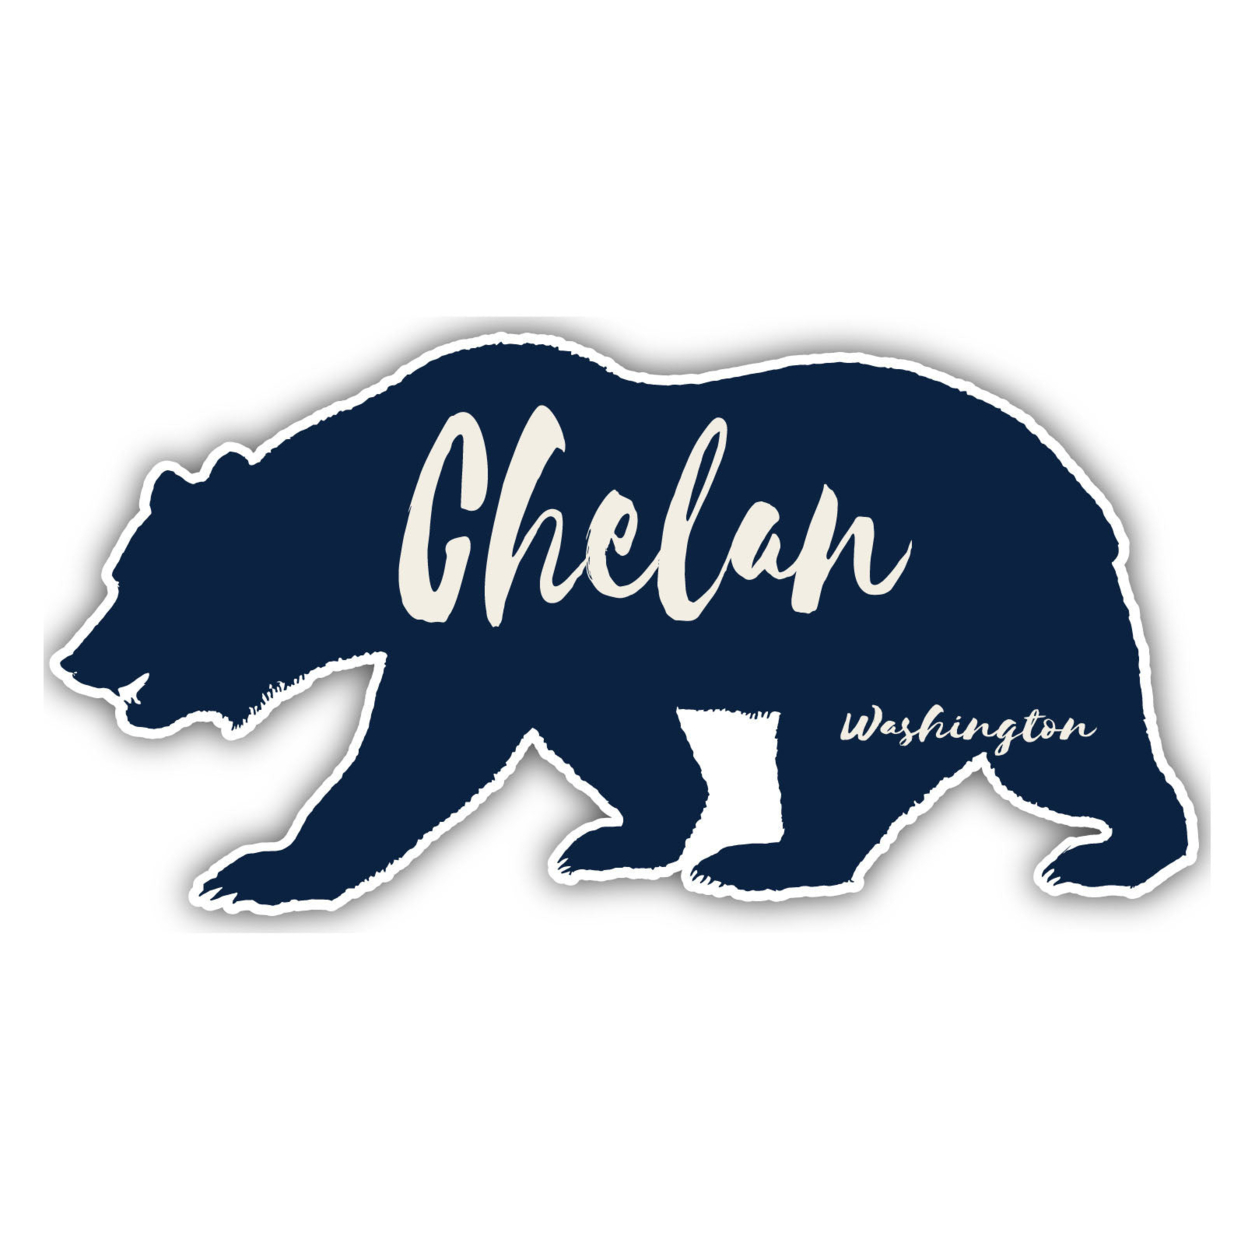 Chelan Washington Souvenir Decorative Stickers (Choose Theme And Size) - 4-Pack, 6-Inch, Tent